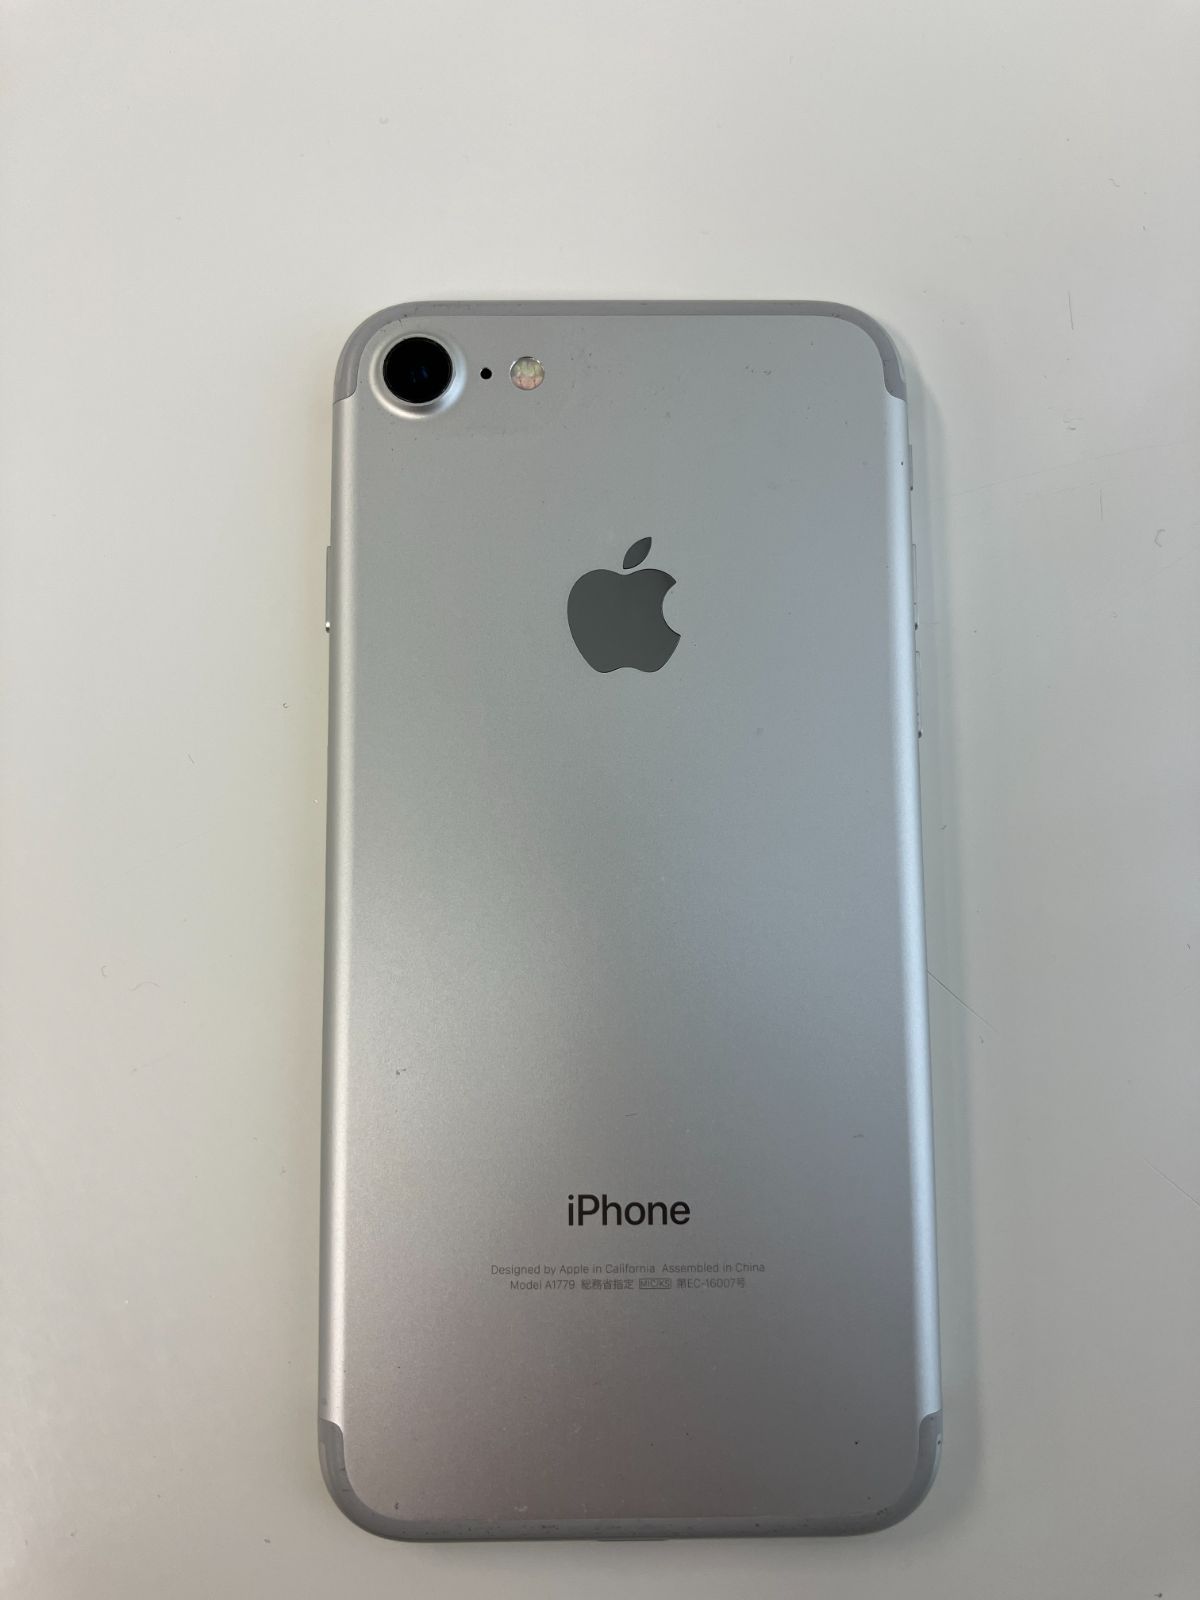 iPhone 7 Silver 32 GB au　ジャンク品